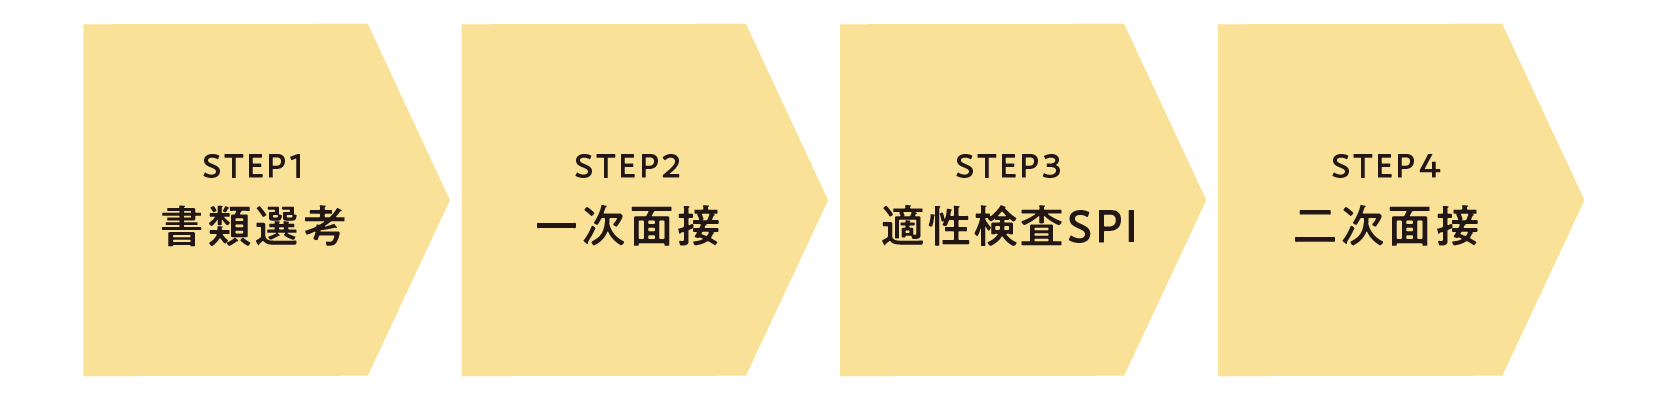 step1書類選考 step2一次面接 step3適性検査SPI step4二次面接